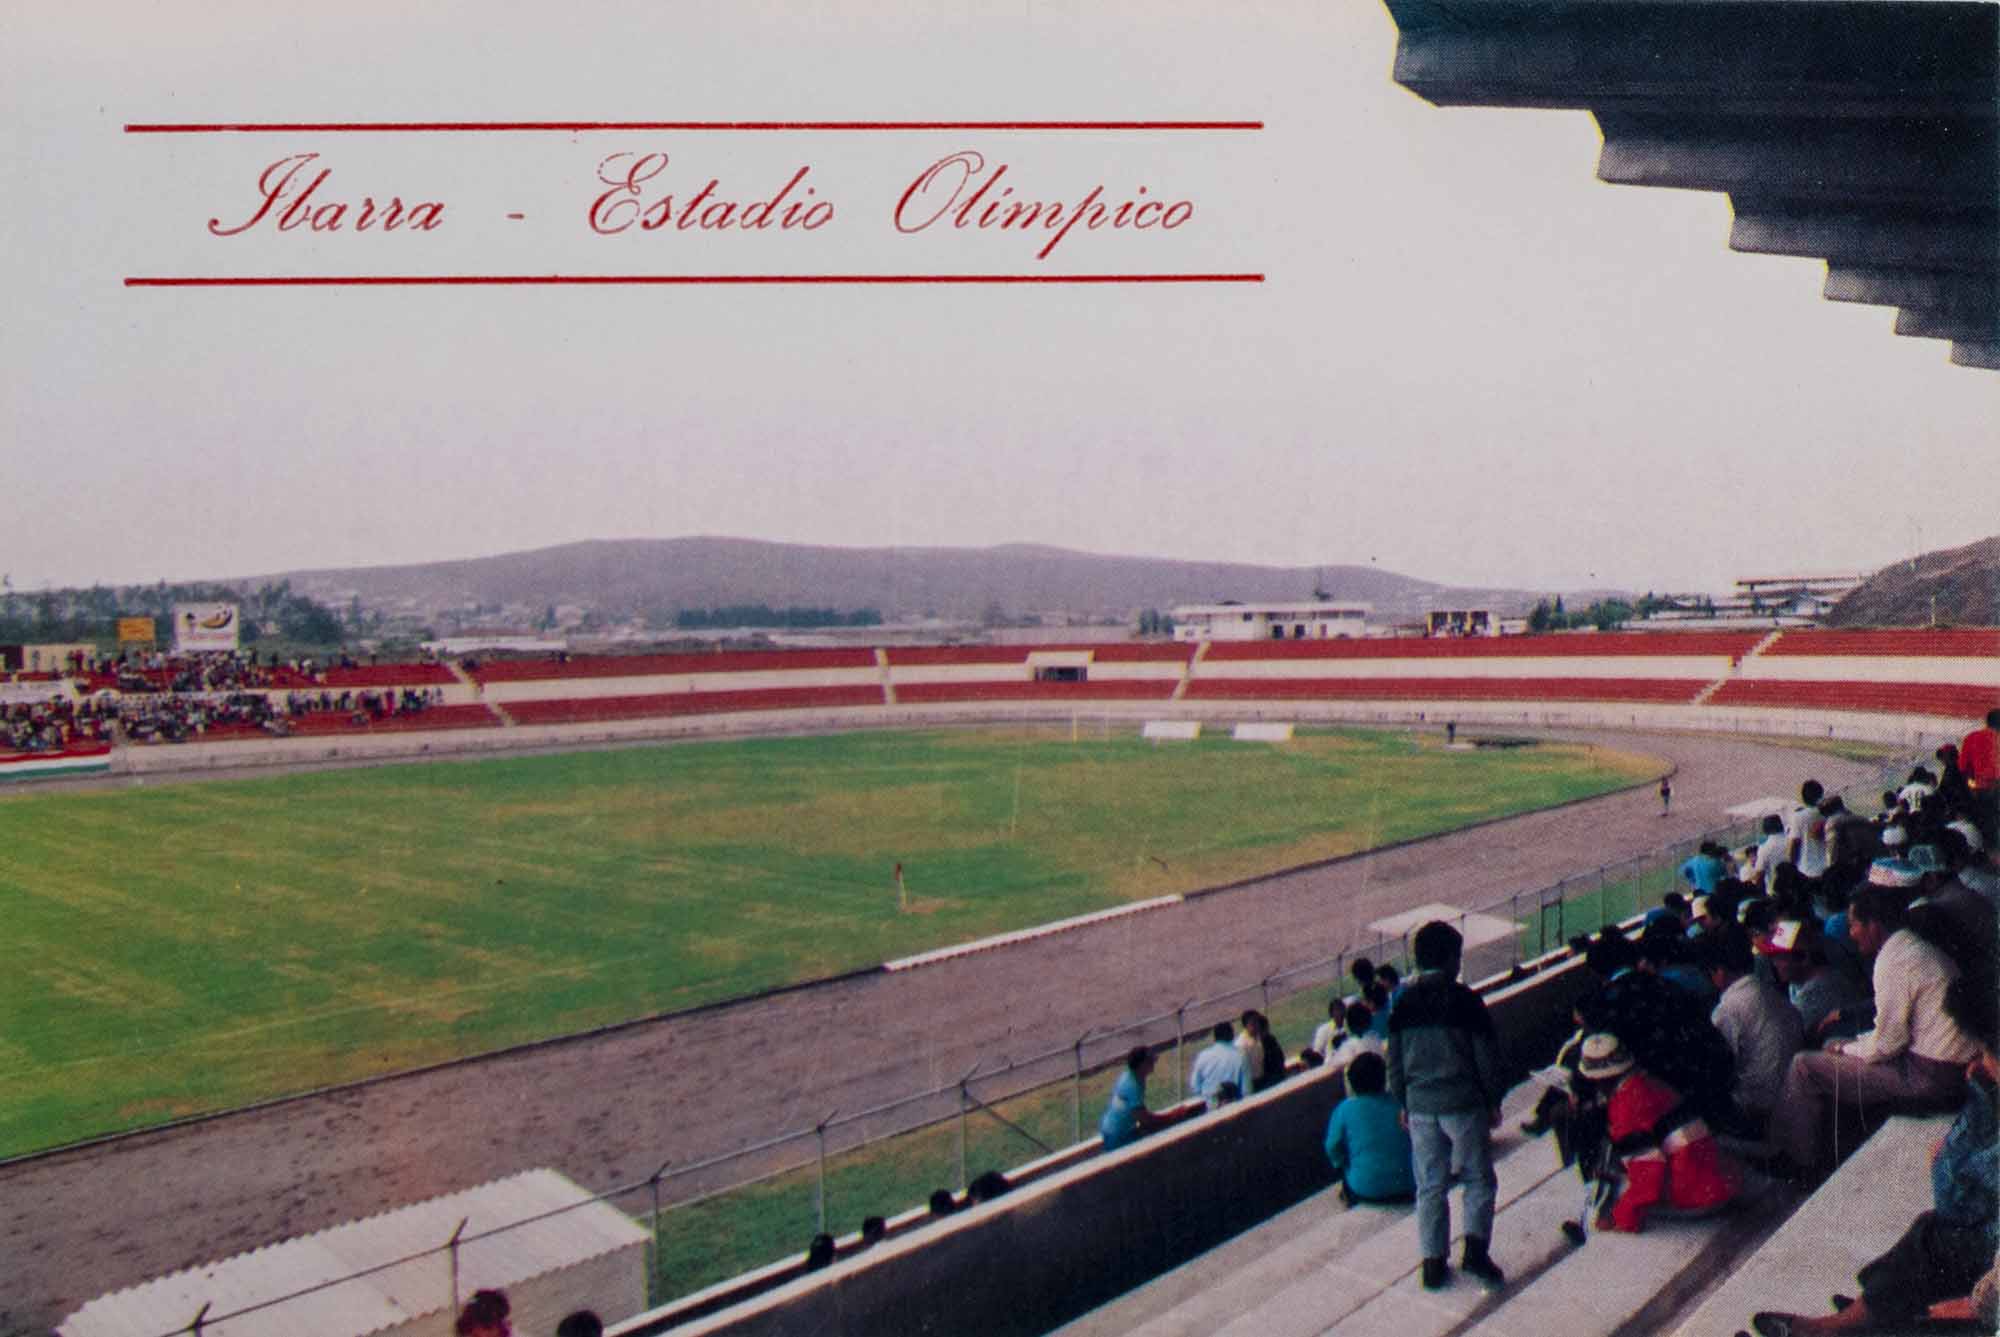 Pohlednice stadion, Ibarra Ecuador, Estadio Olimpico